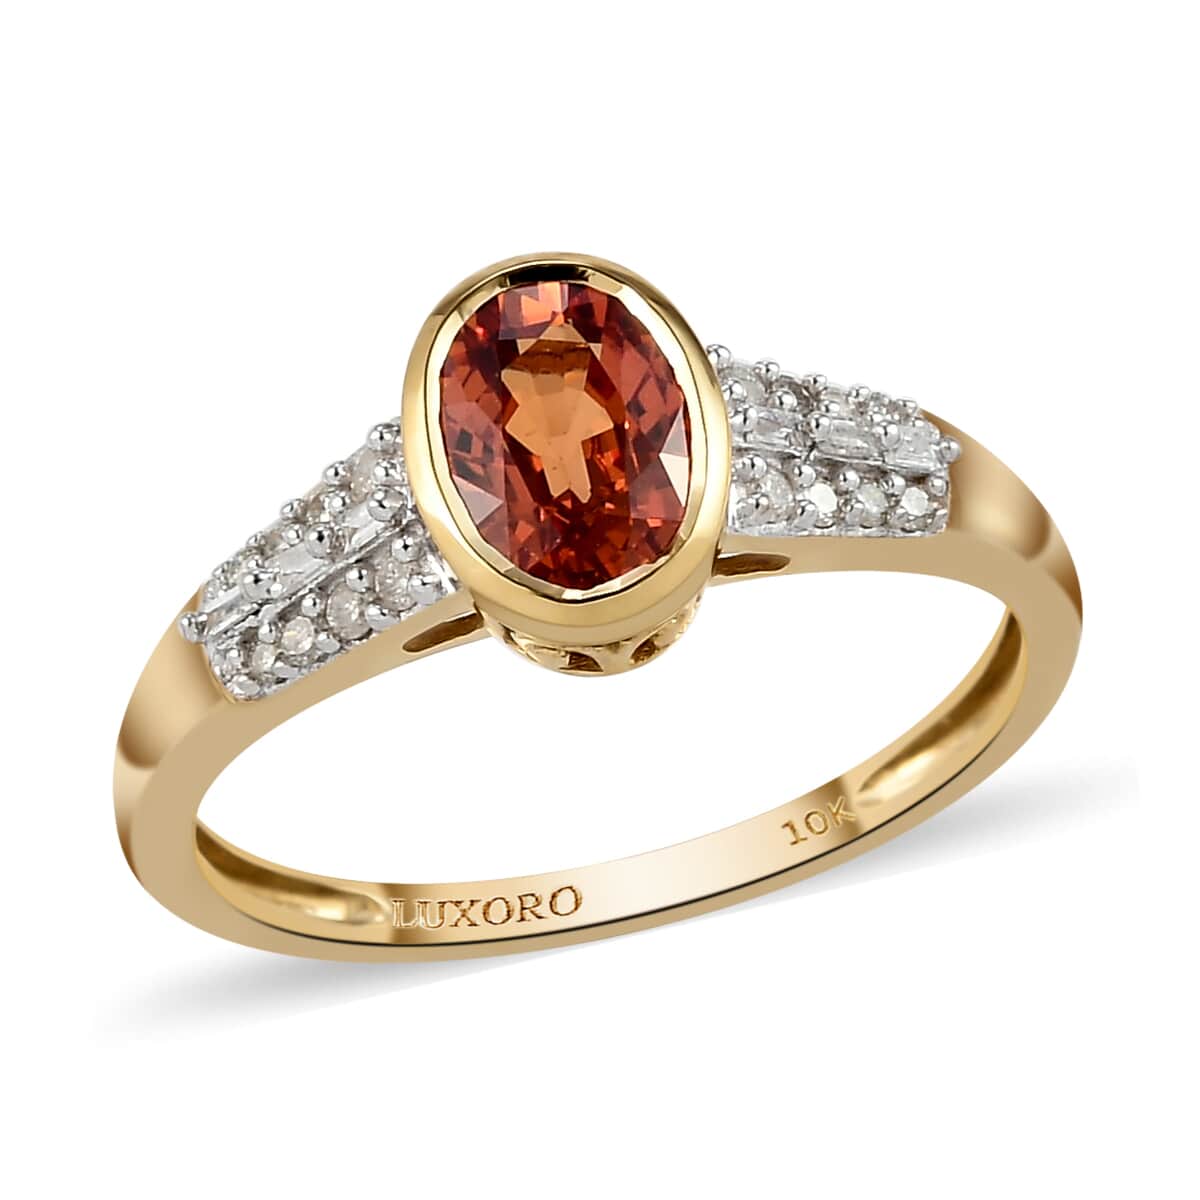 LUXORO 10K Yellow Gold Premium Songea Sapphire and Diamond Ring (Size 7.0) 2.10 Grams 1.35 ctw image number 0